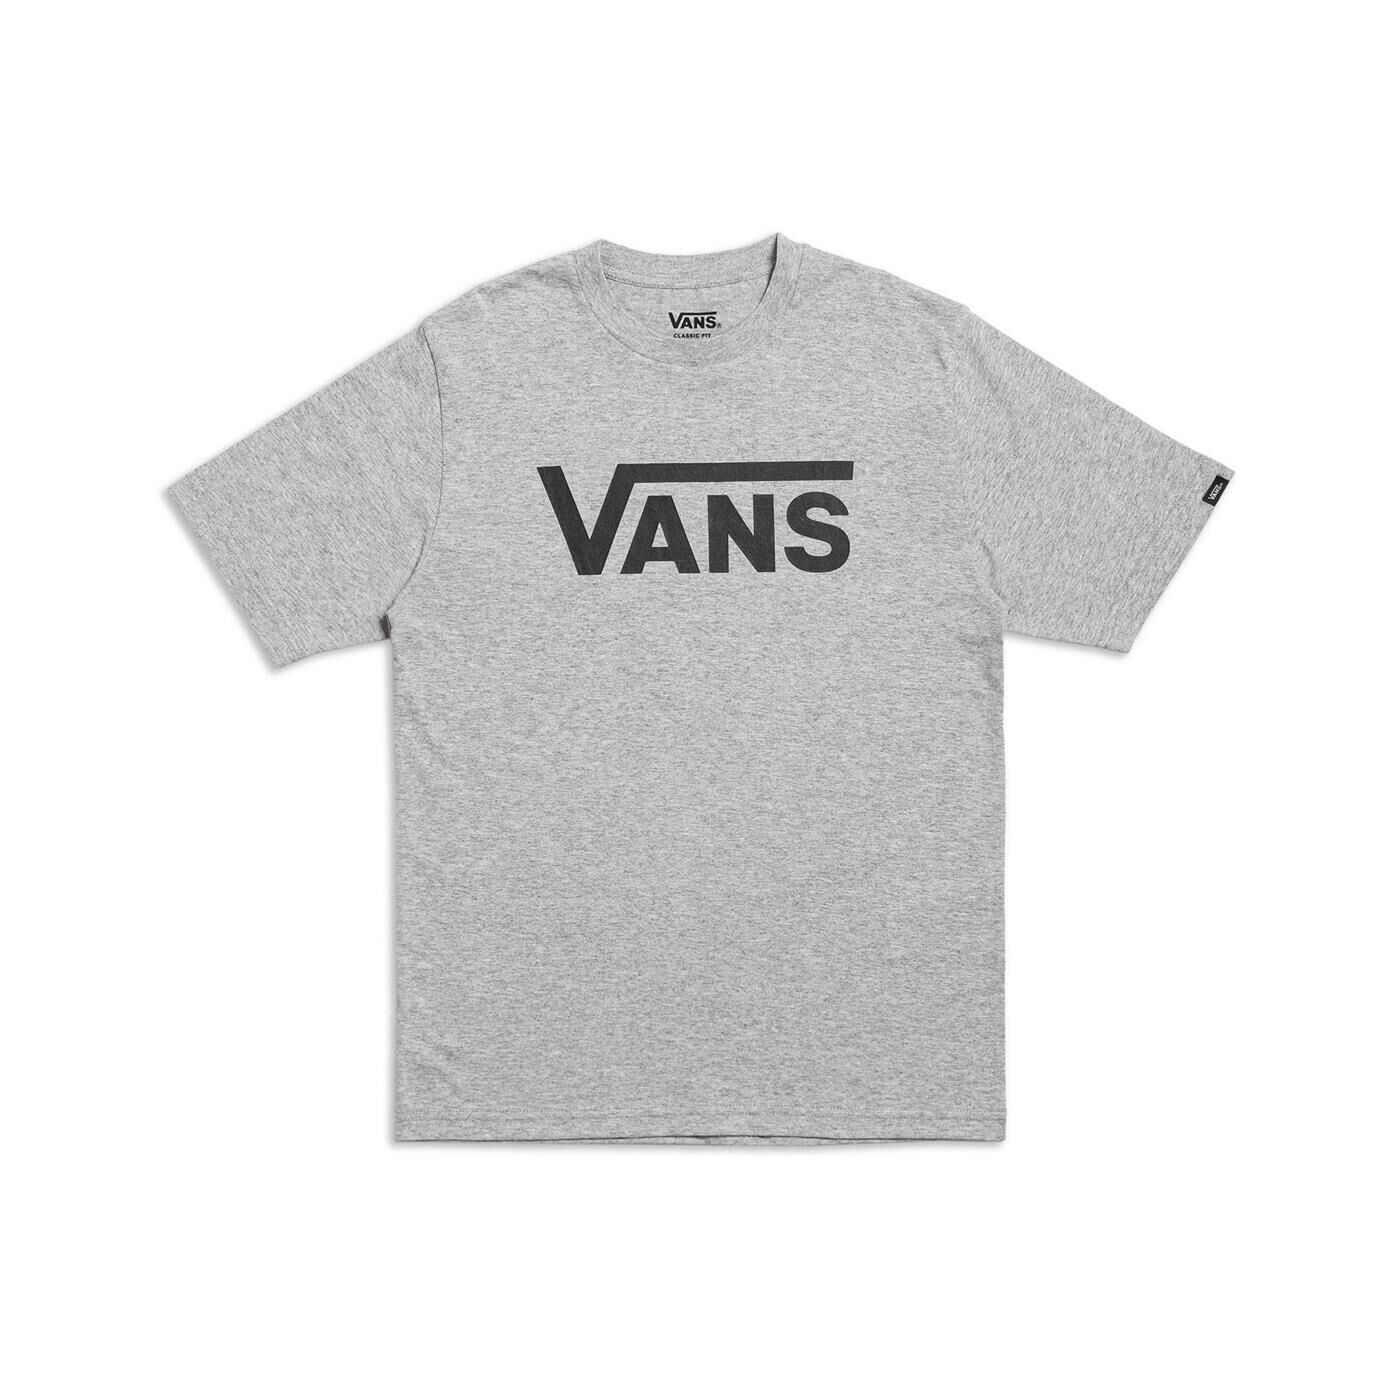 Vans Classic Boys T-shirt